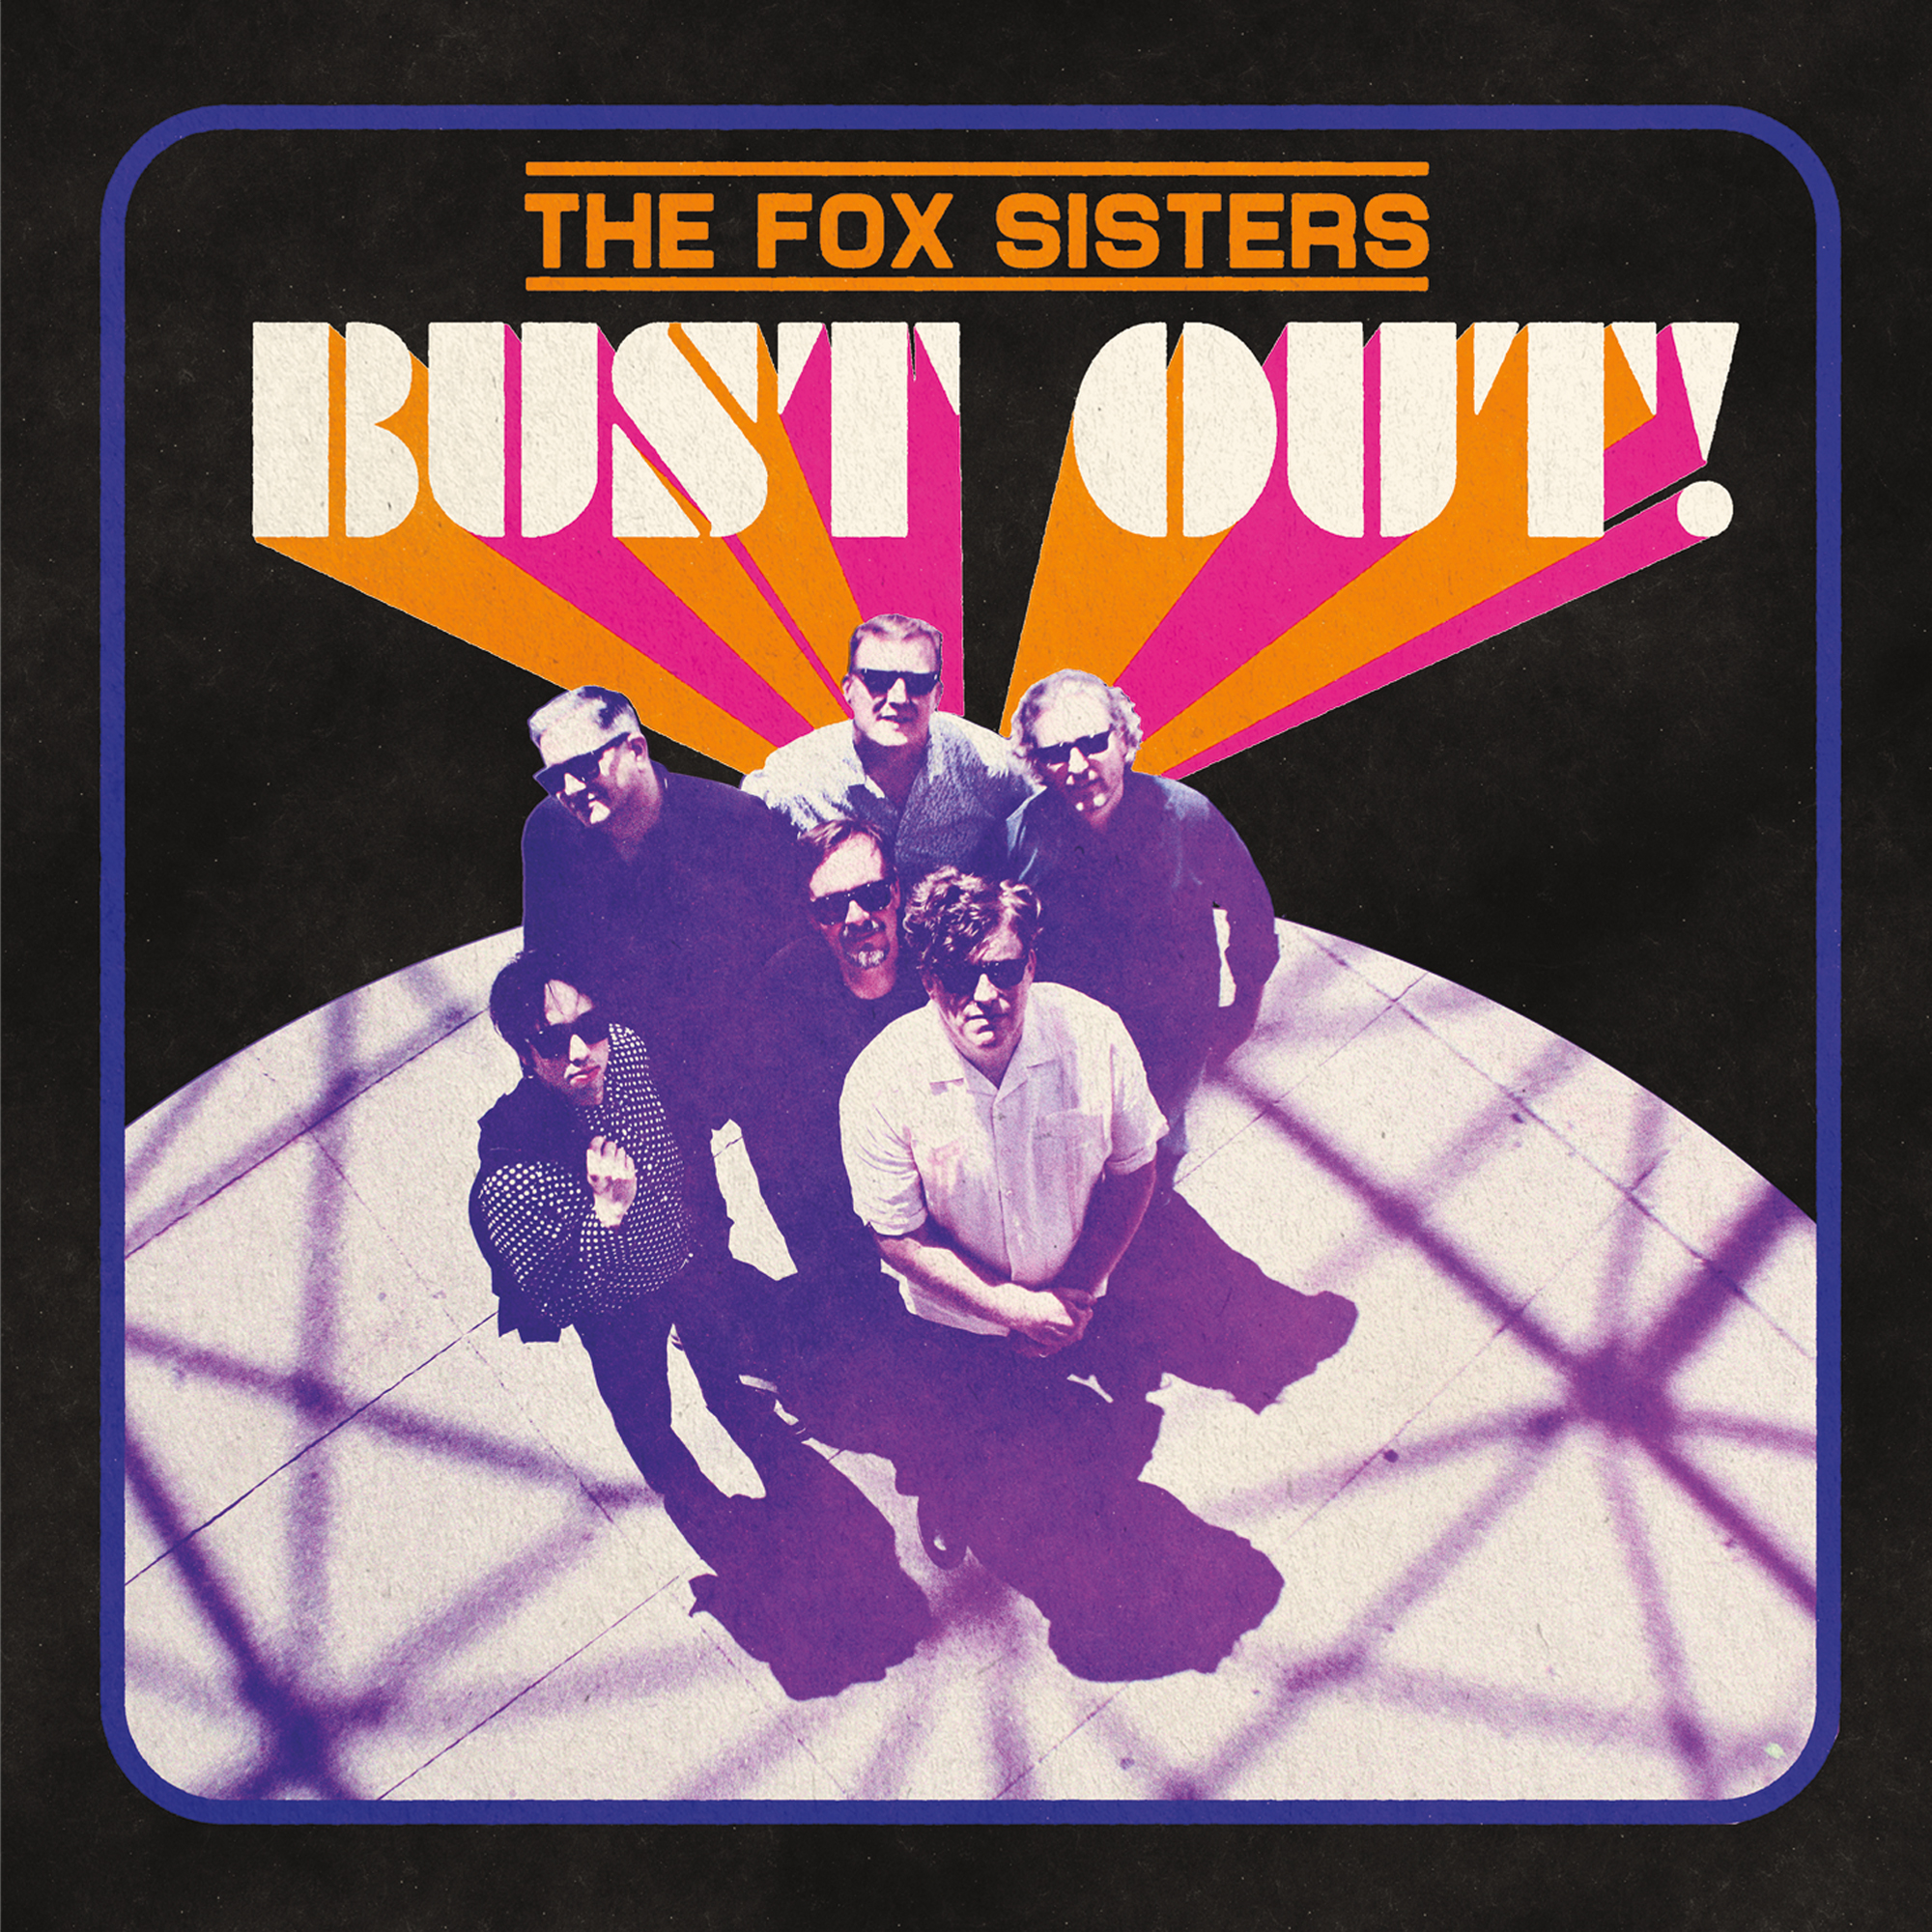 Sister fox. Funk Soul sisters. Suffer Fools. Фокс Систерс Самара. Dreams Fox sisters.